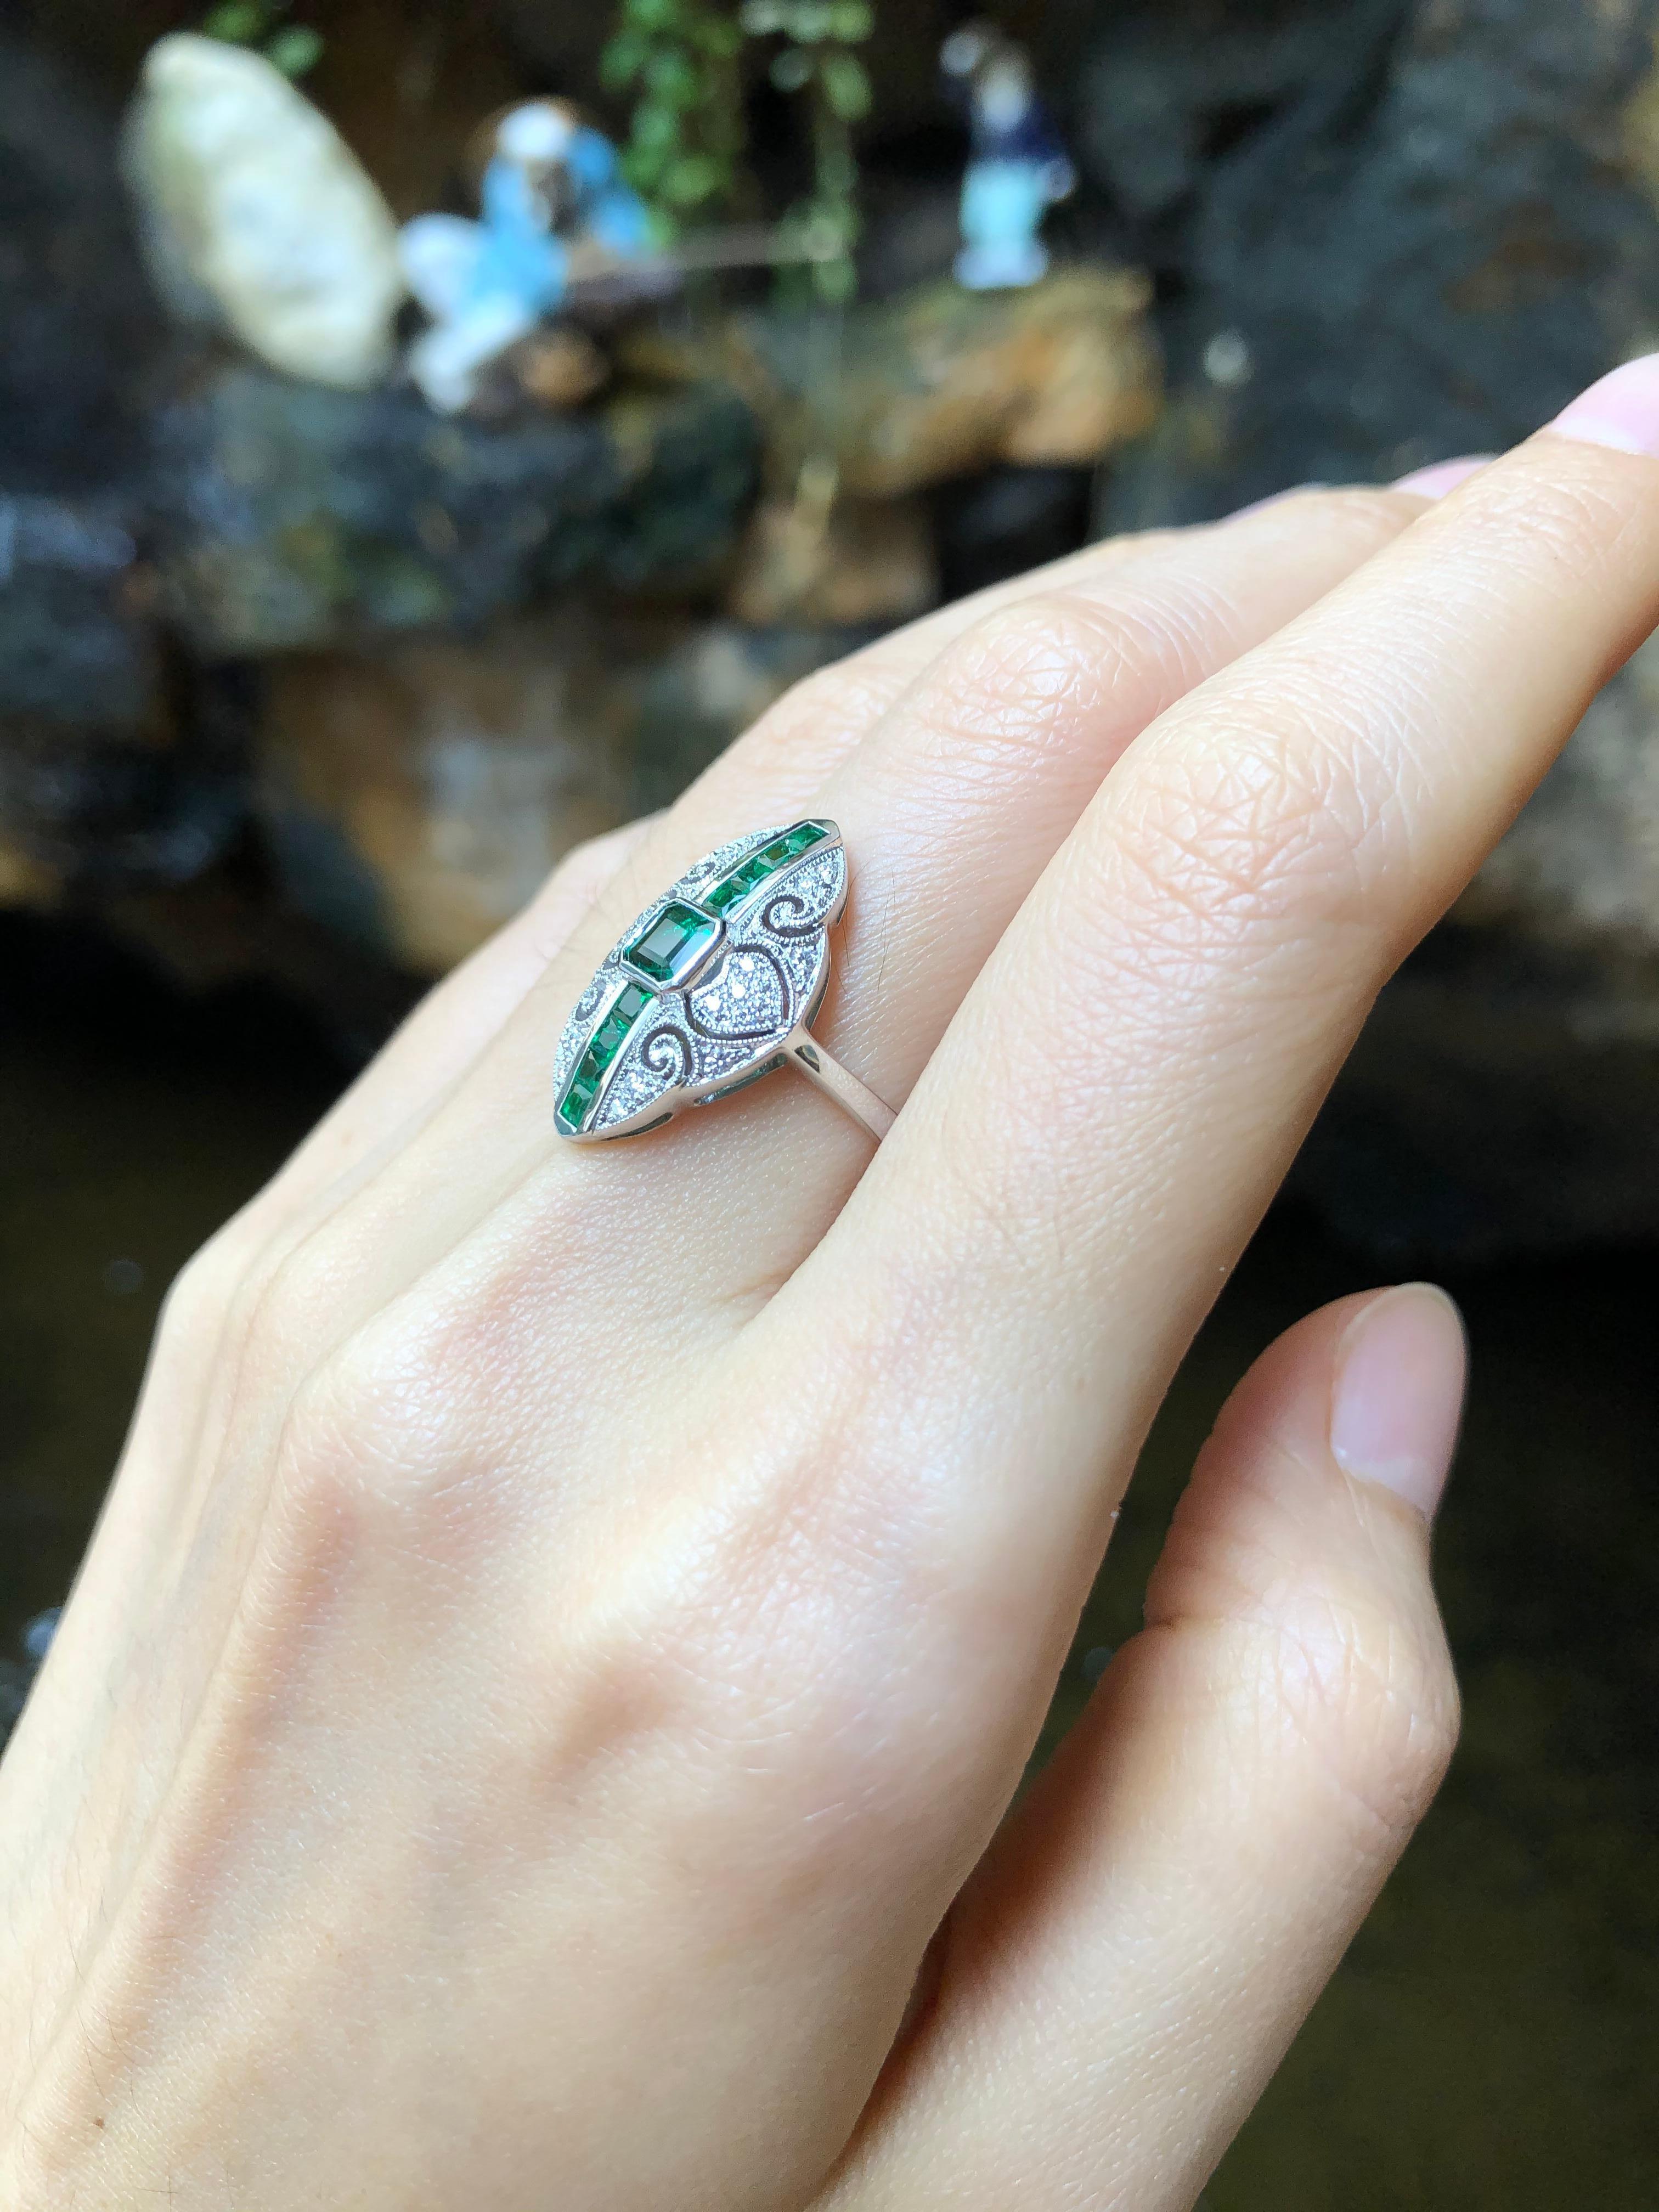 Emerald 0.80 carat with Diamond 0.14 carat Ring set in 18 Karat White Gold Settings

Width:  1.4 cm 
Length: 2.2 cm
Ring Size: 52
Total Weight: 5.89 grams

